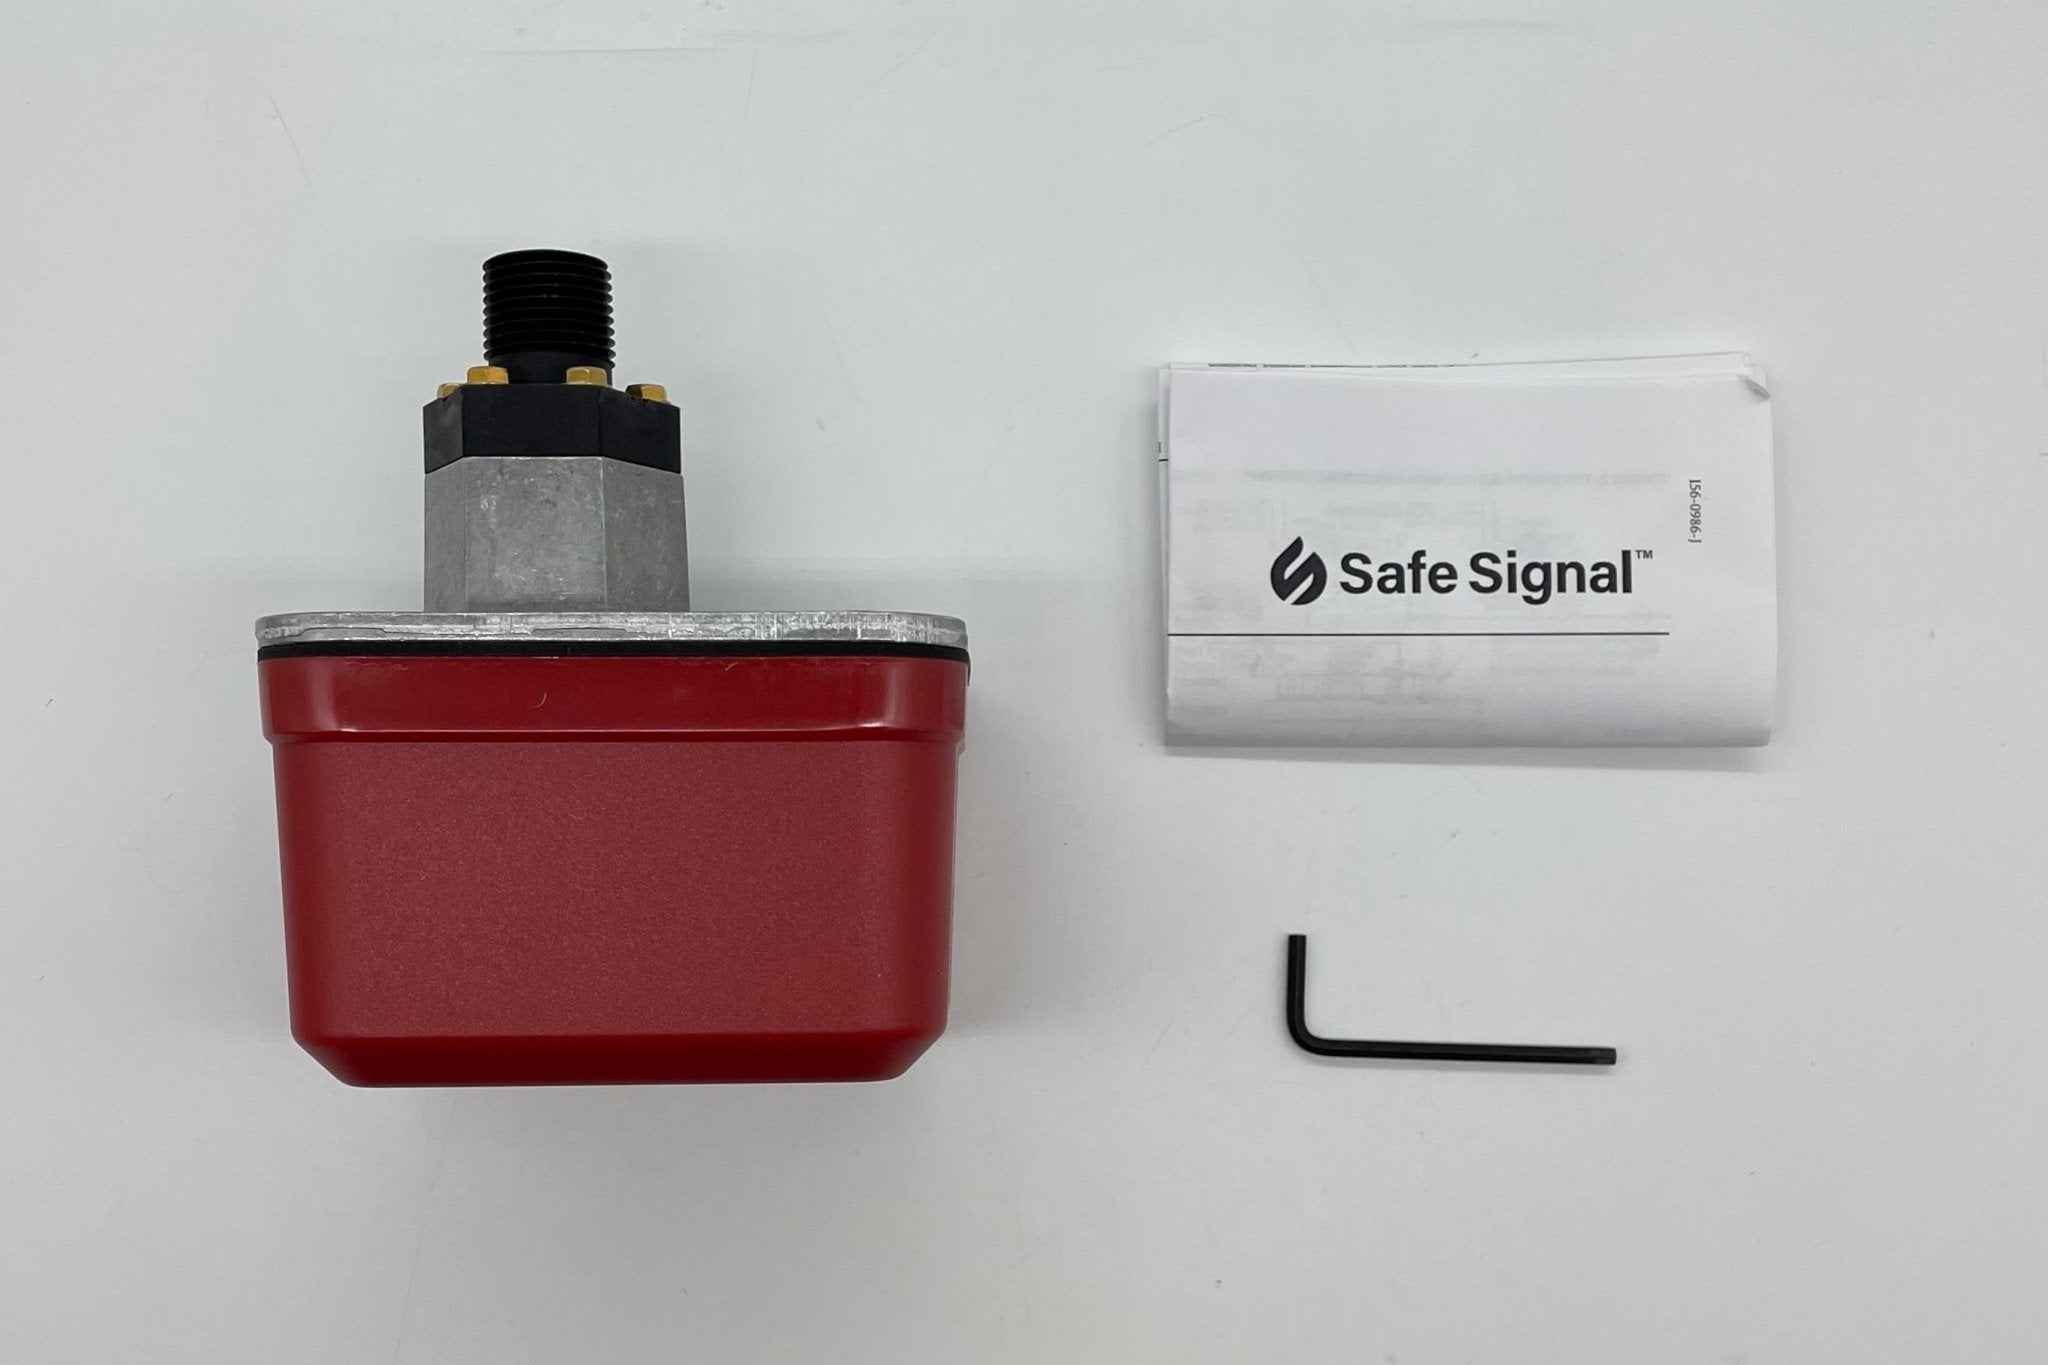 Firelite EPS120-1 - The Fire Alarm Supplier